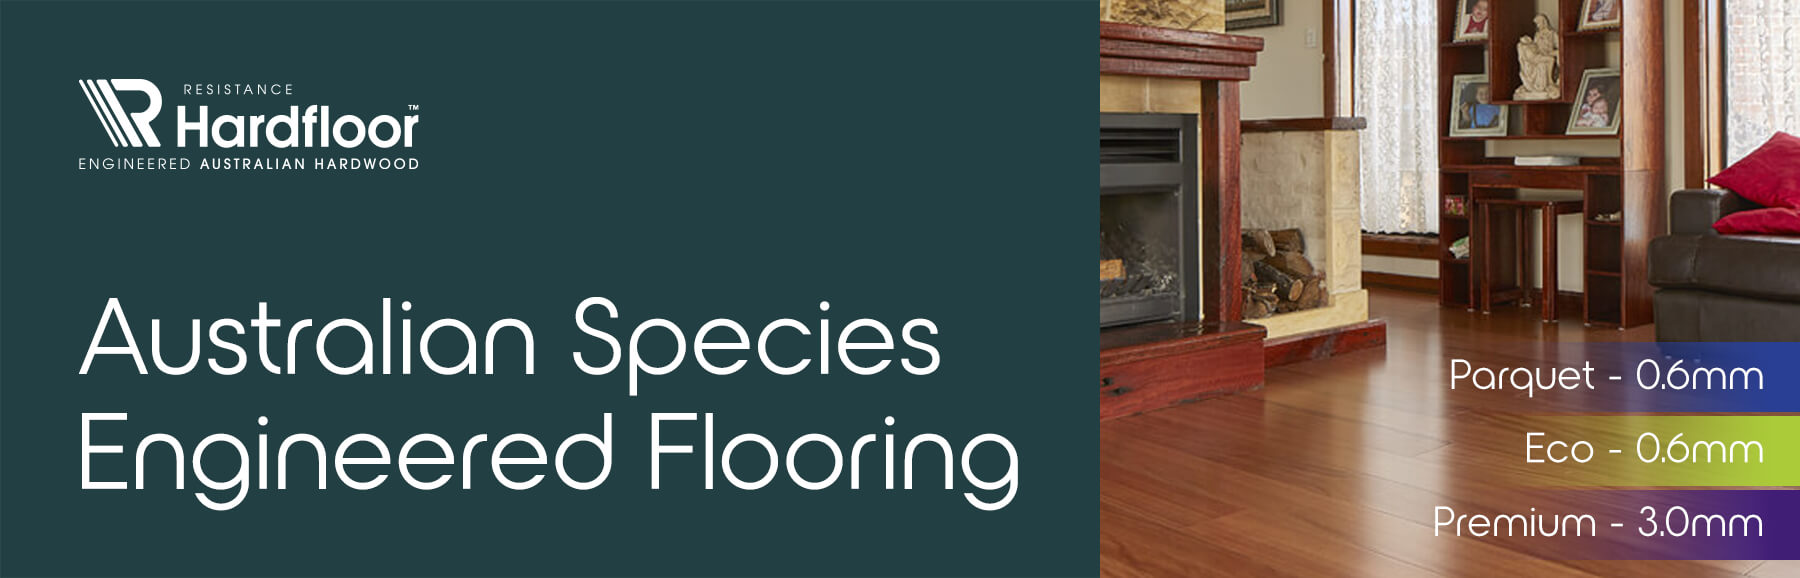 Australian Species Engineered Flooring